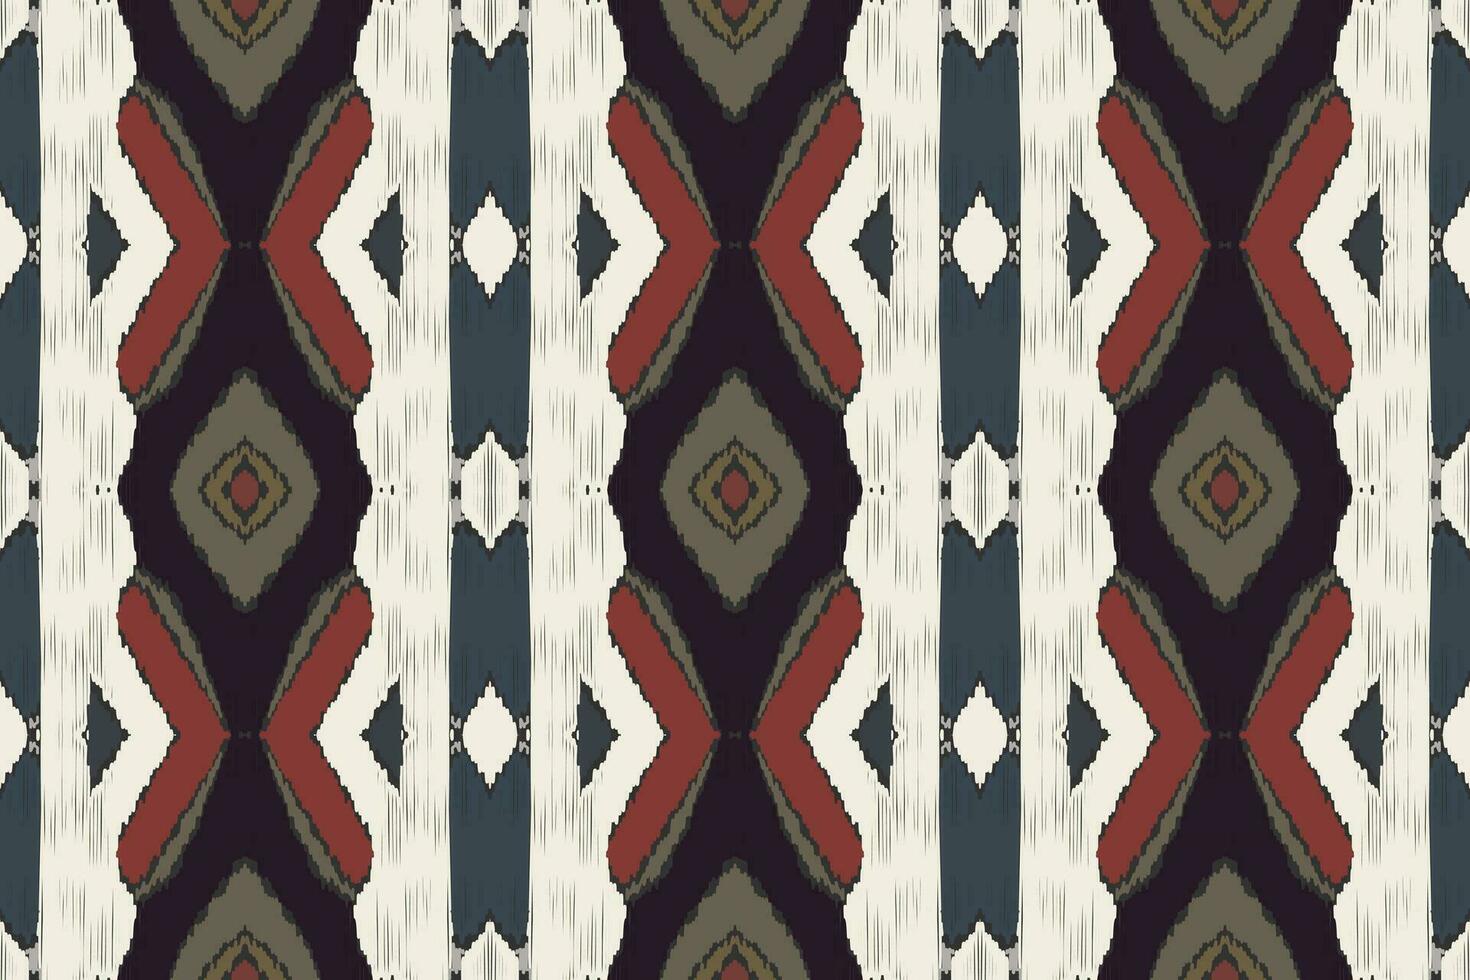 motivo ikat sin costura modelo bordado antecedentes. ikat impresión geométrico étnico oriental modelo tradicional. ikat azteca estilo resumen diseño para impresión textura,tela,sari,sari,alfombra. vector